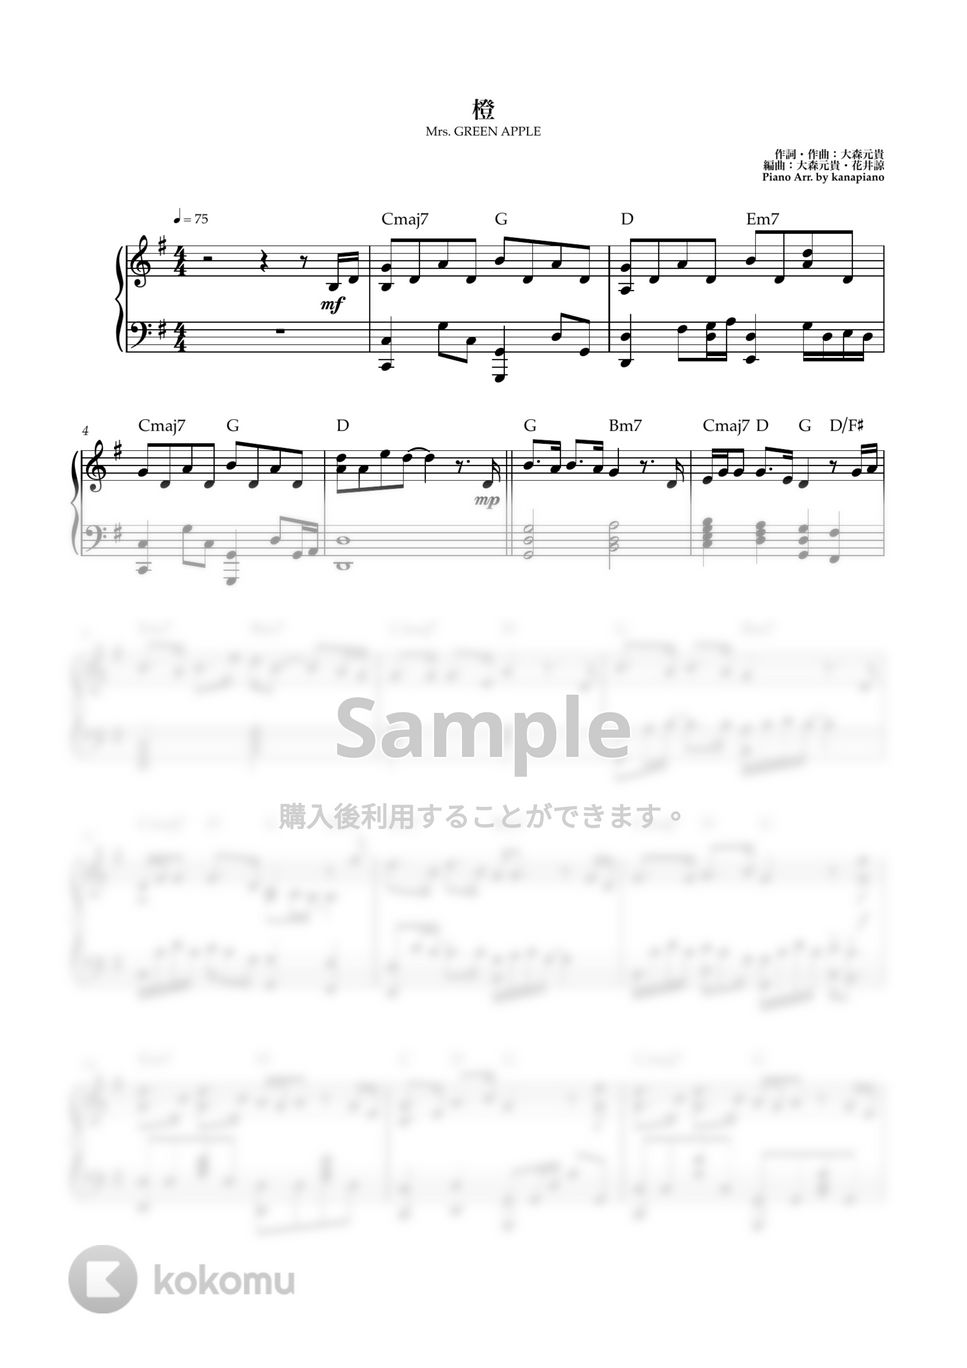 Mrs. GREEN APPLE - 橙 (ピアノソロ/ANTENNA) by kanapiano